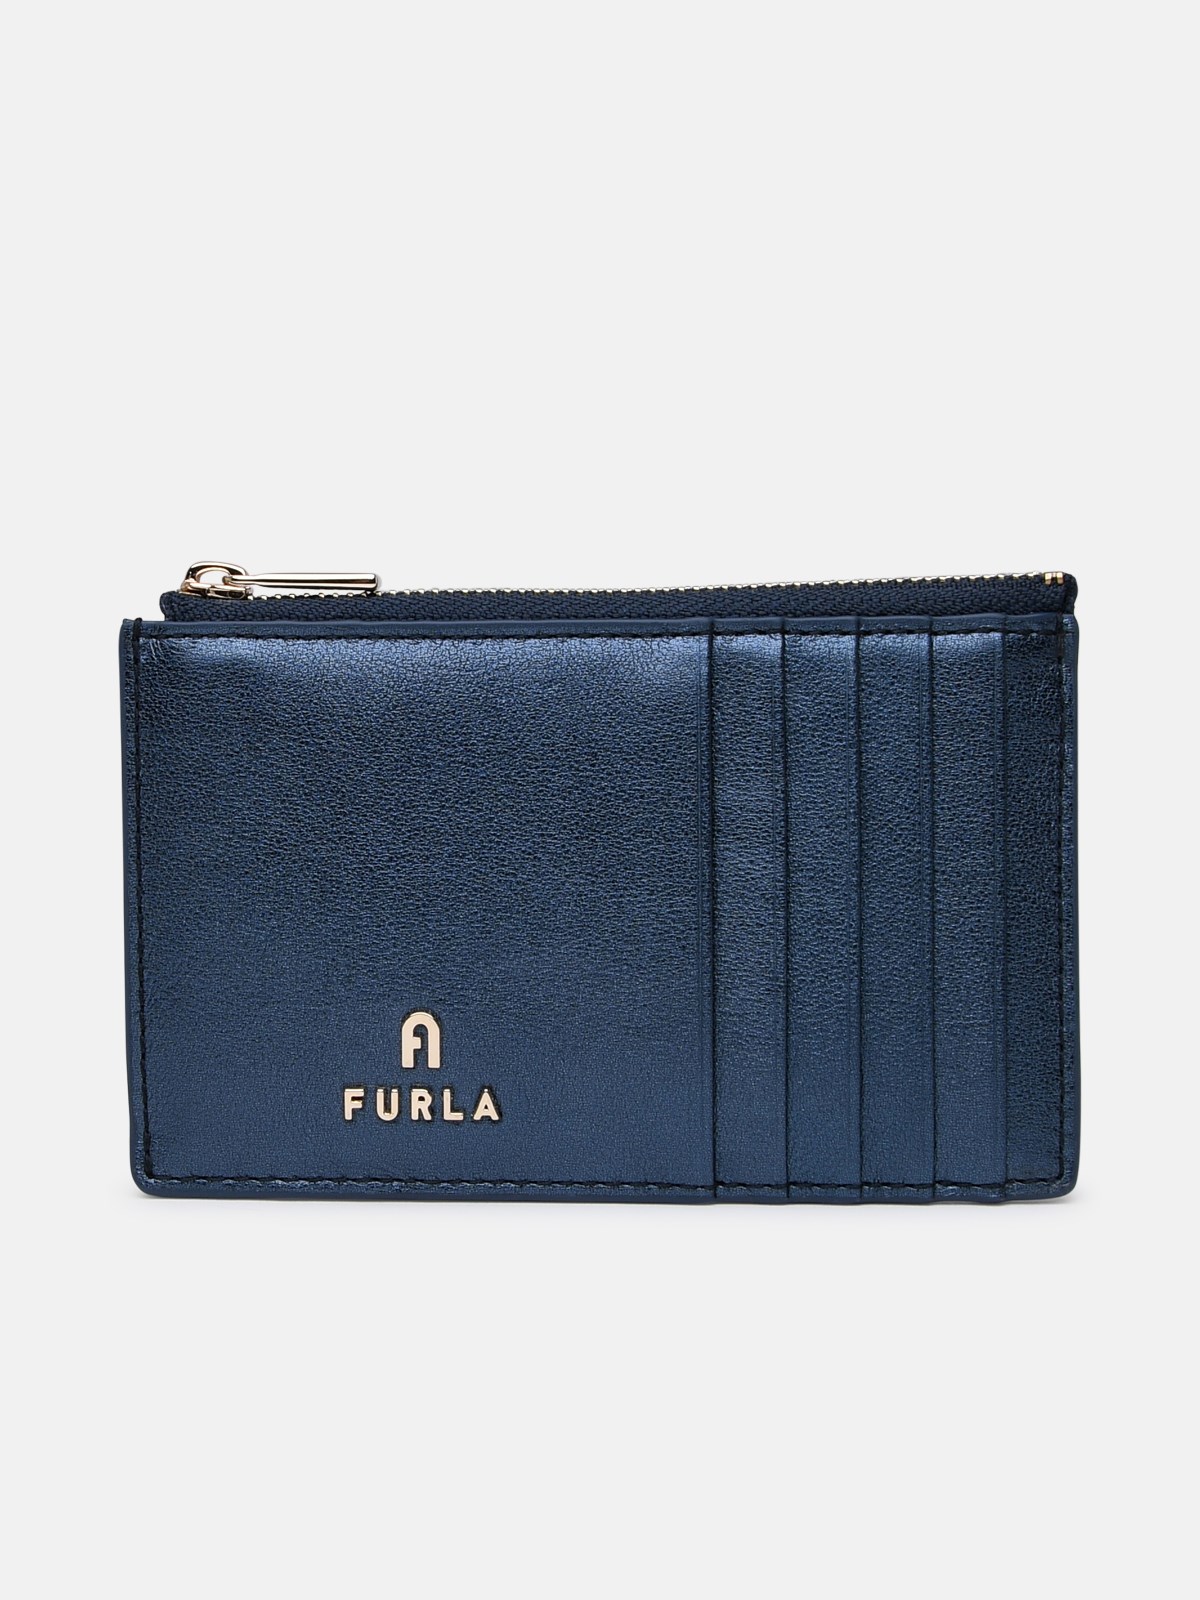 Furla Blu Leather Cardholder In Blue